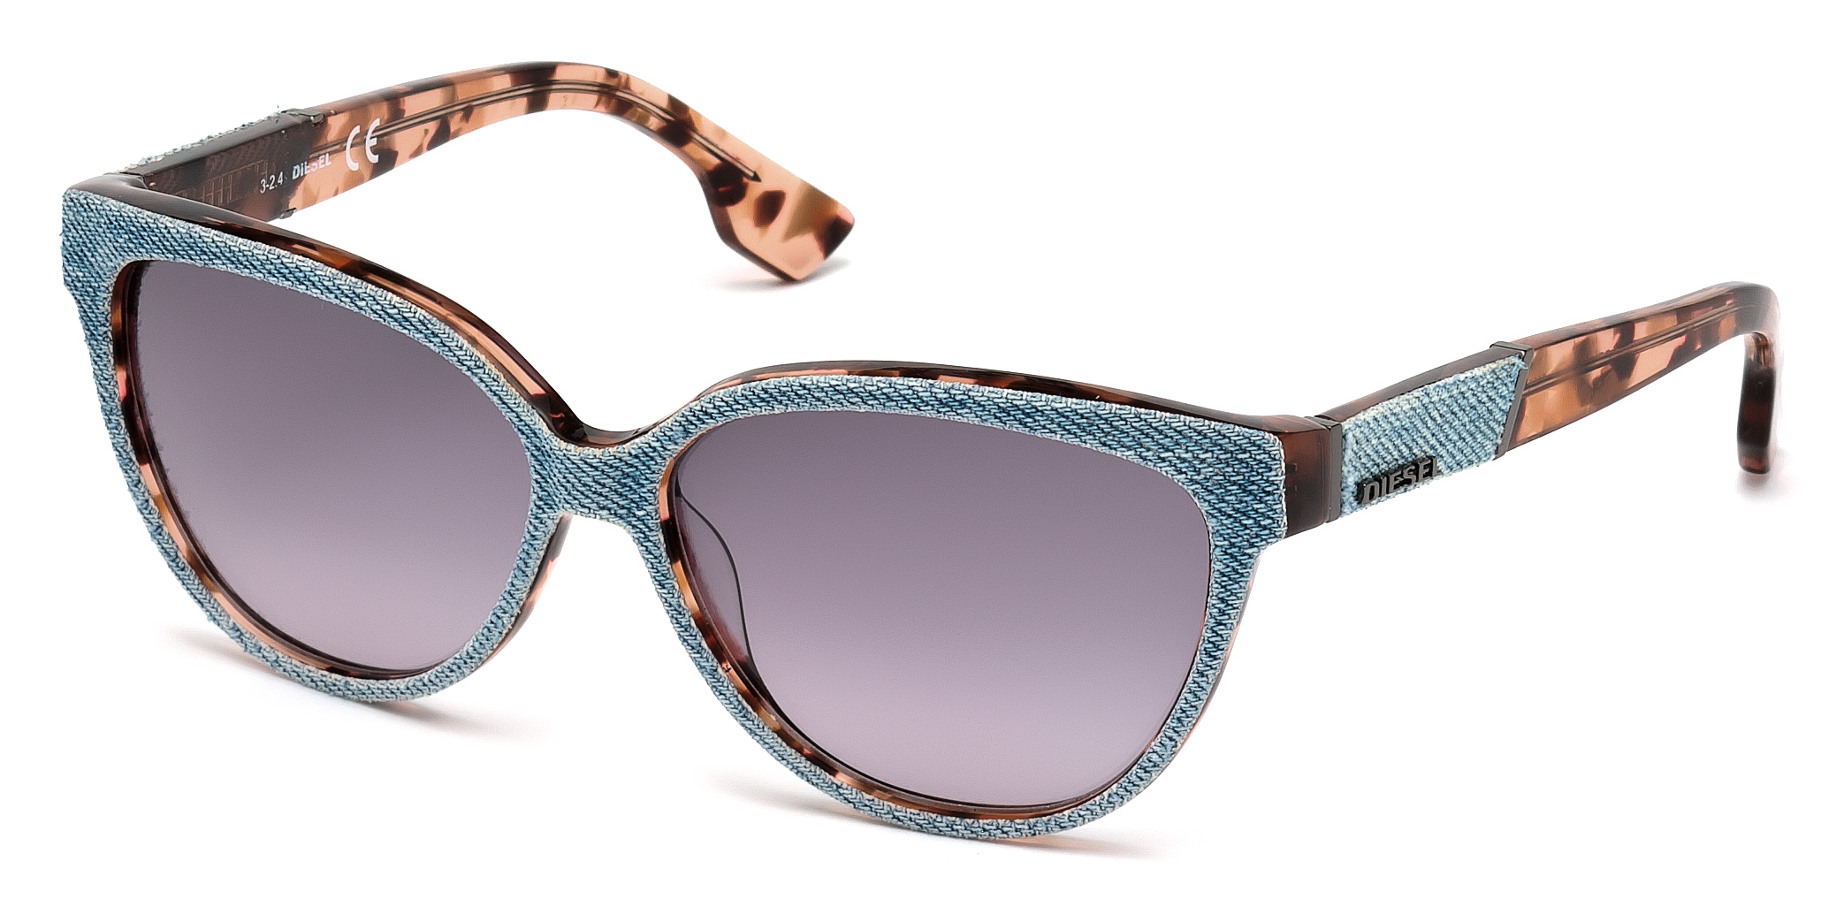 Marcolin Eyewear sunglasses Diesel FW 15 16 (3)